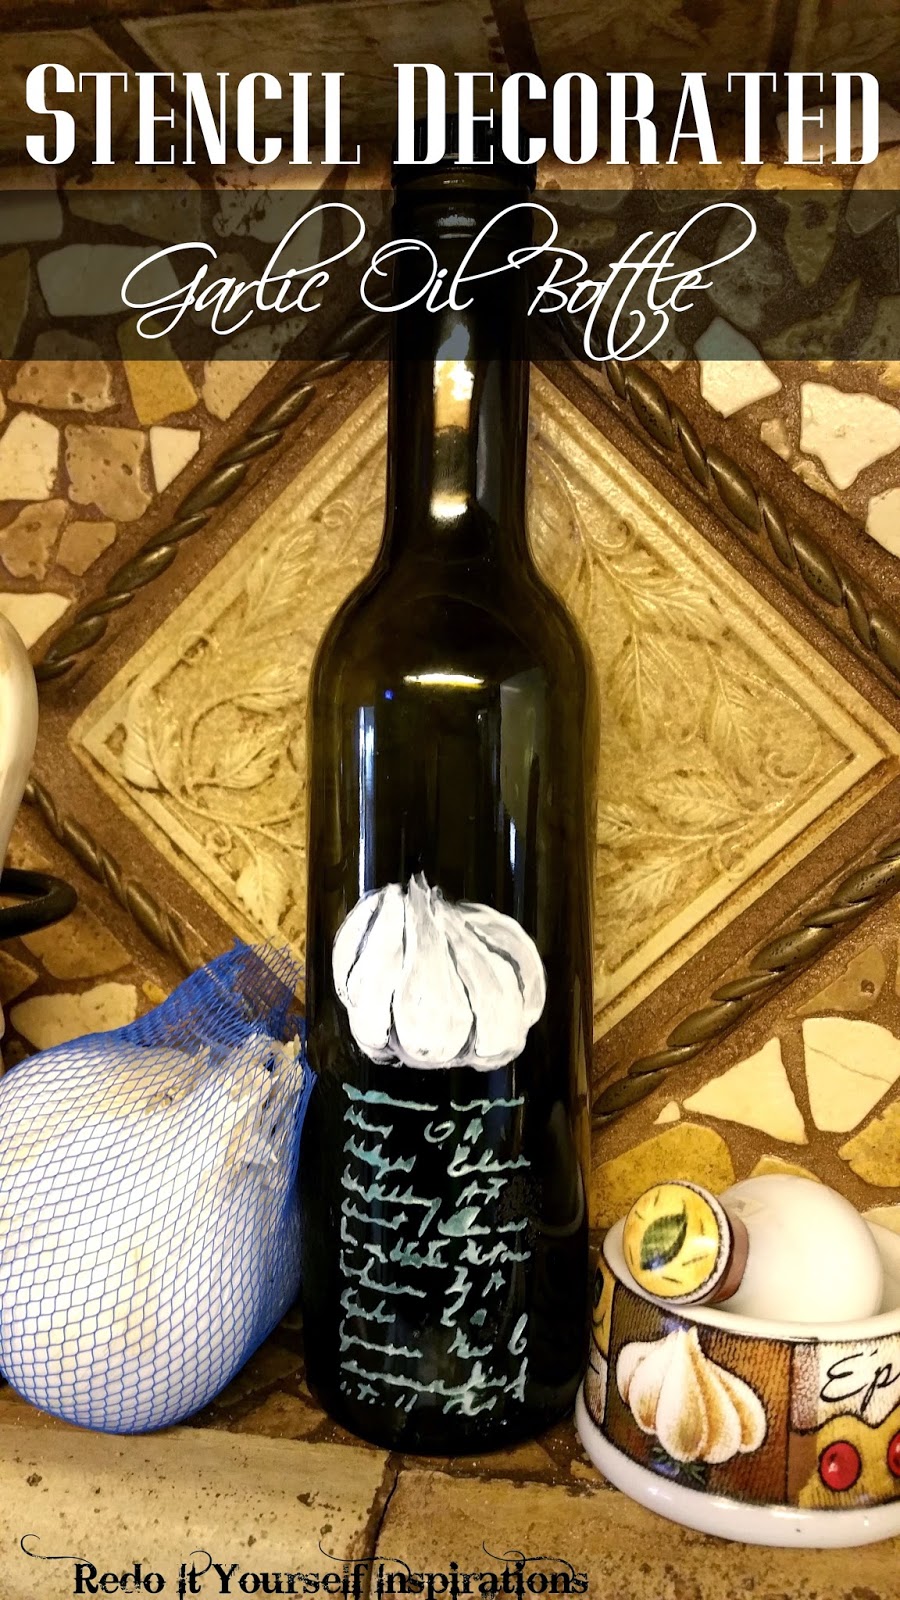 Stencile Decorated Garlic Oil Bottle